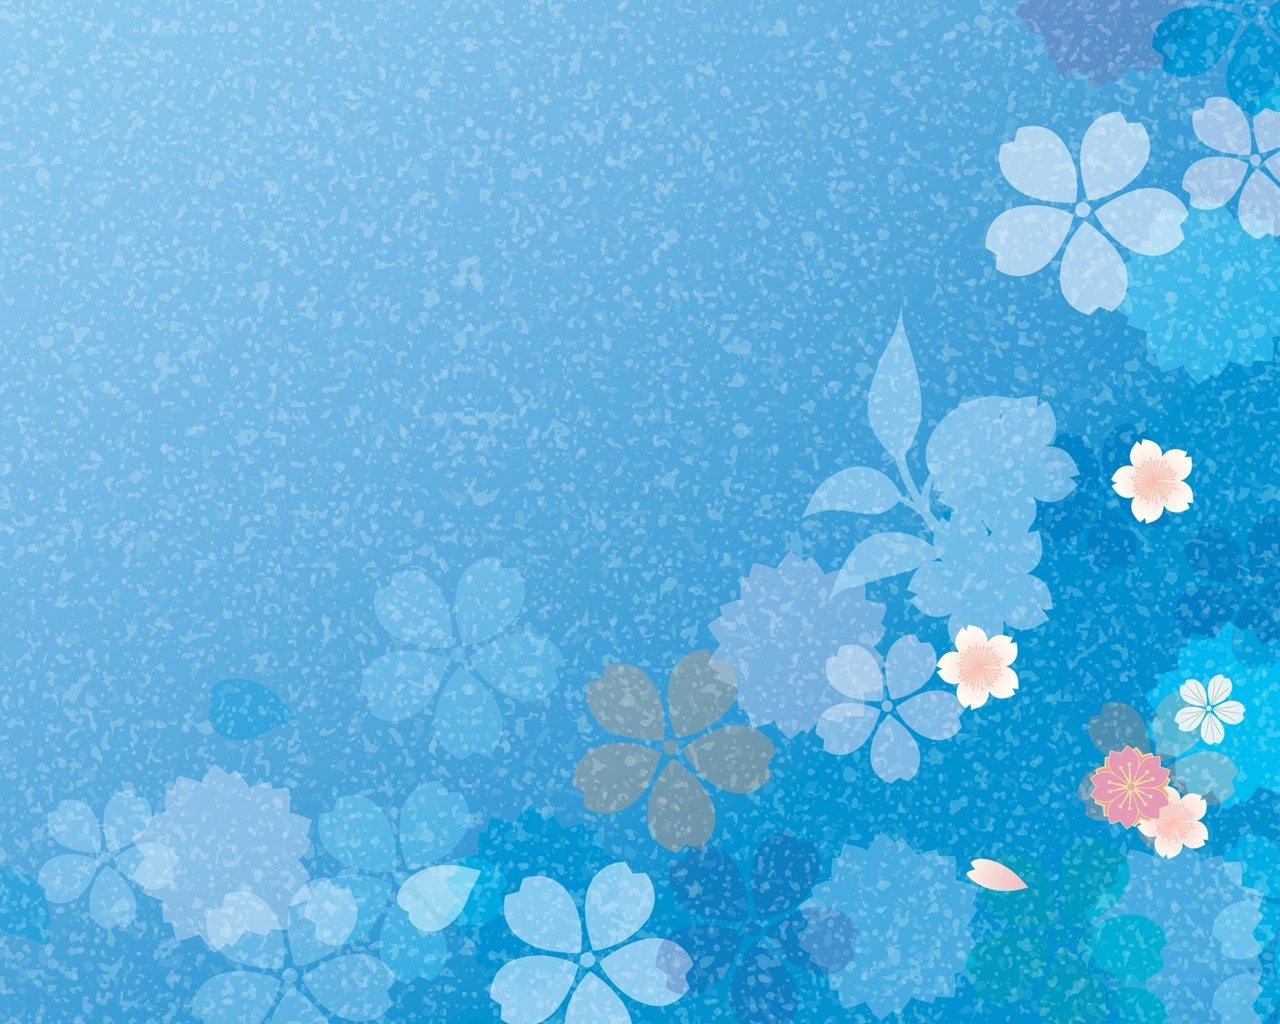 Flower Computer Wallpapers, Desktop Backgrounds | 1280x1024 | ID ...